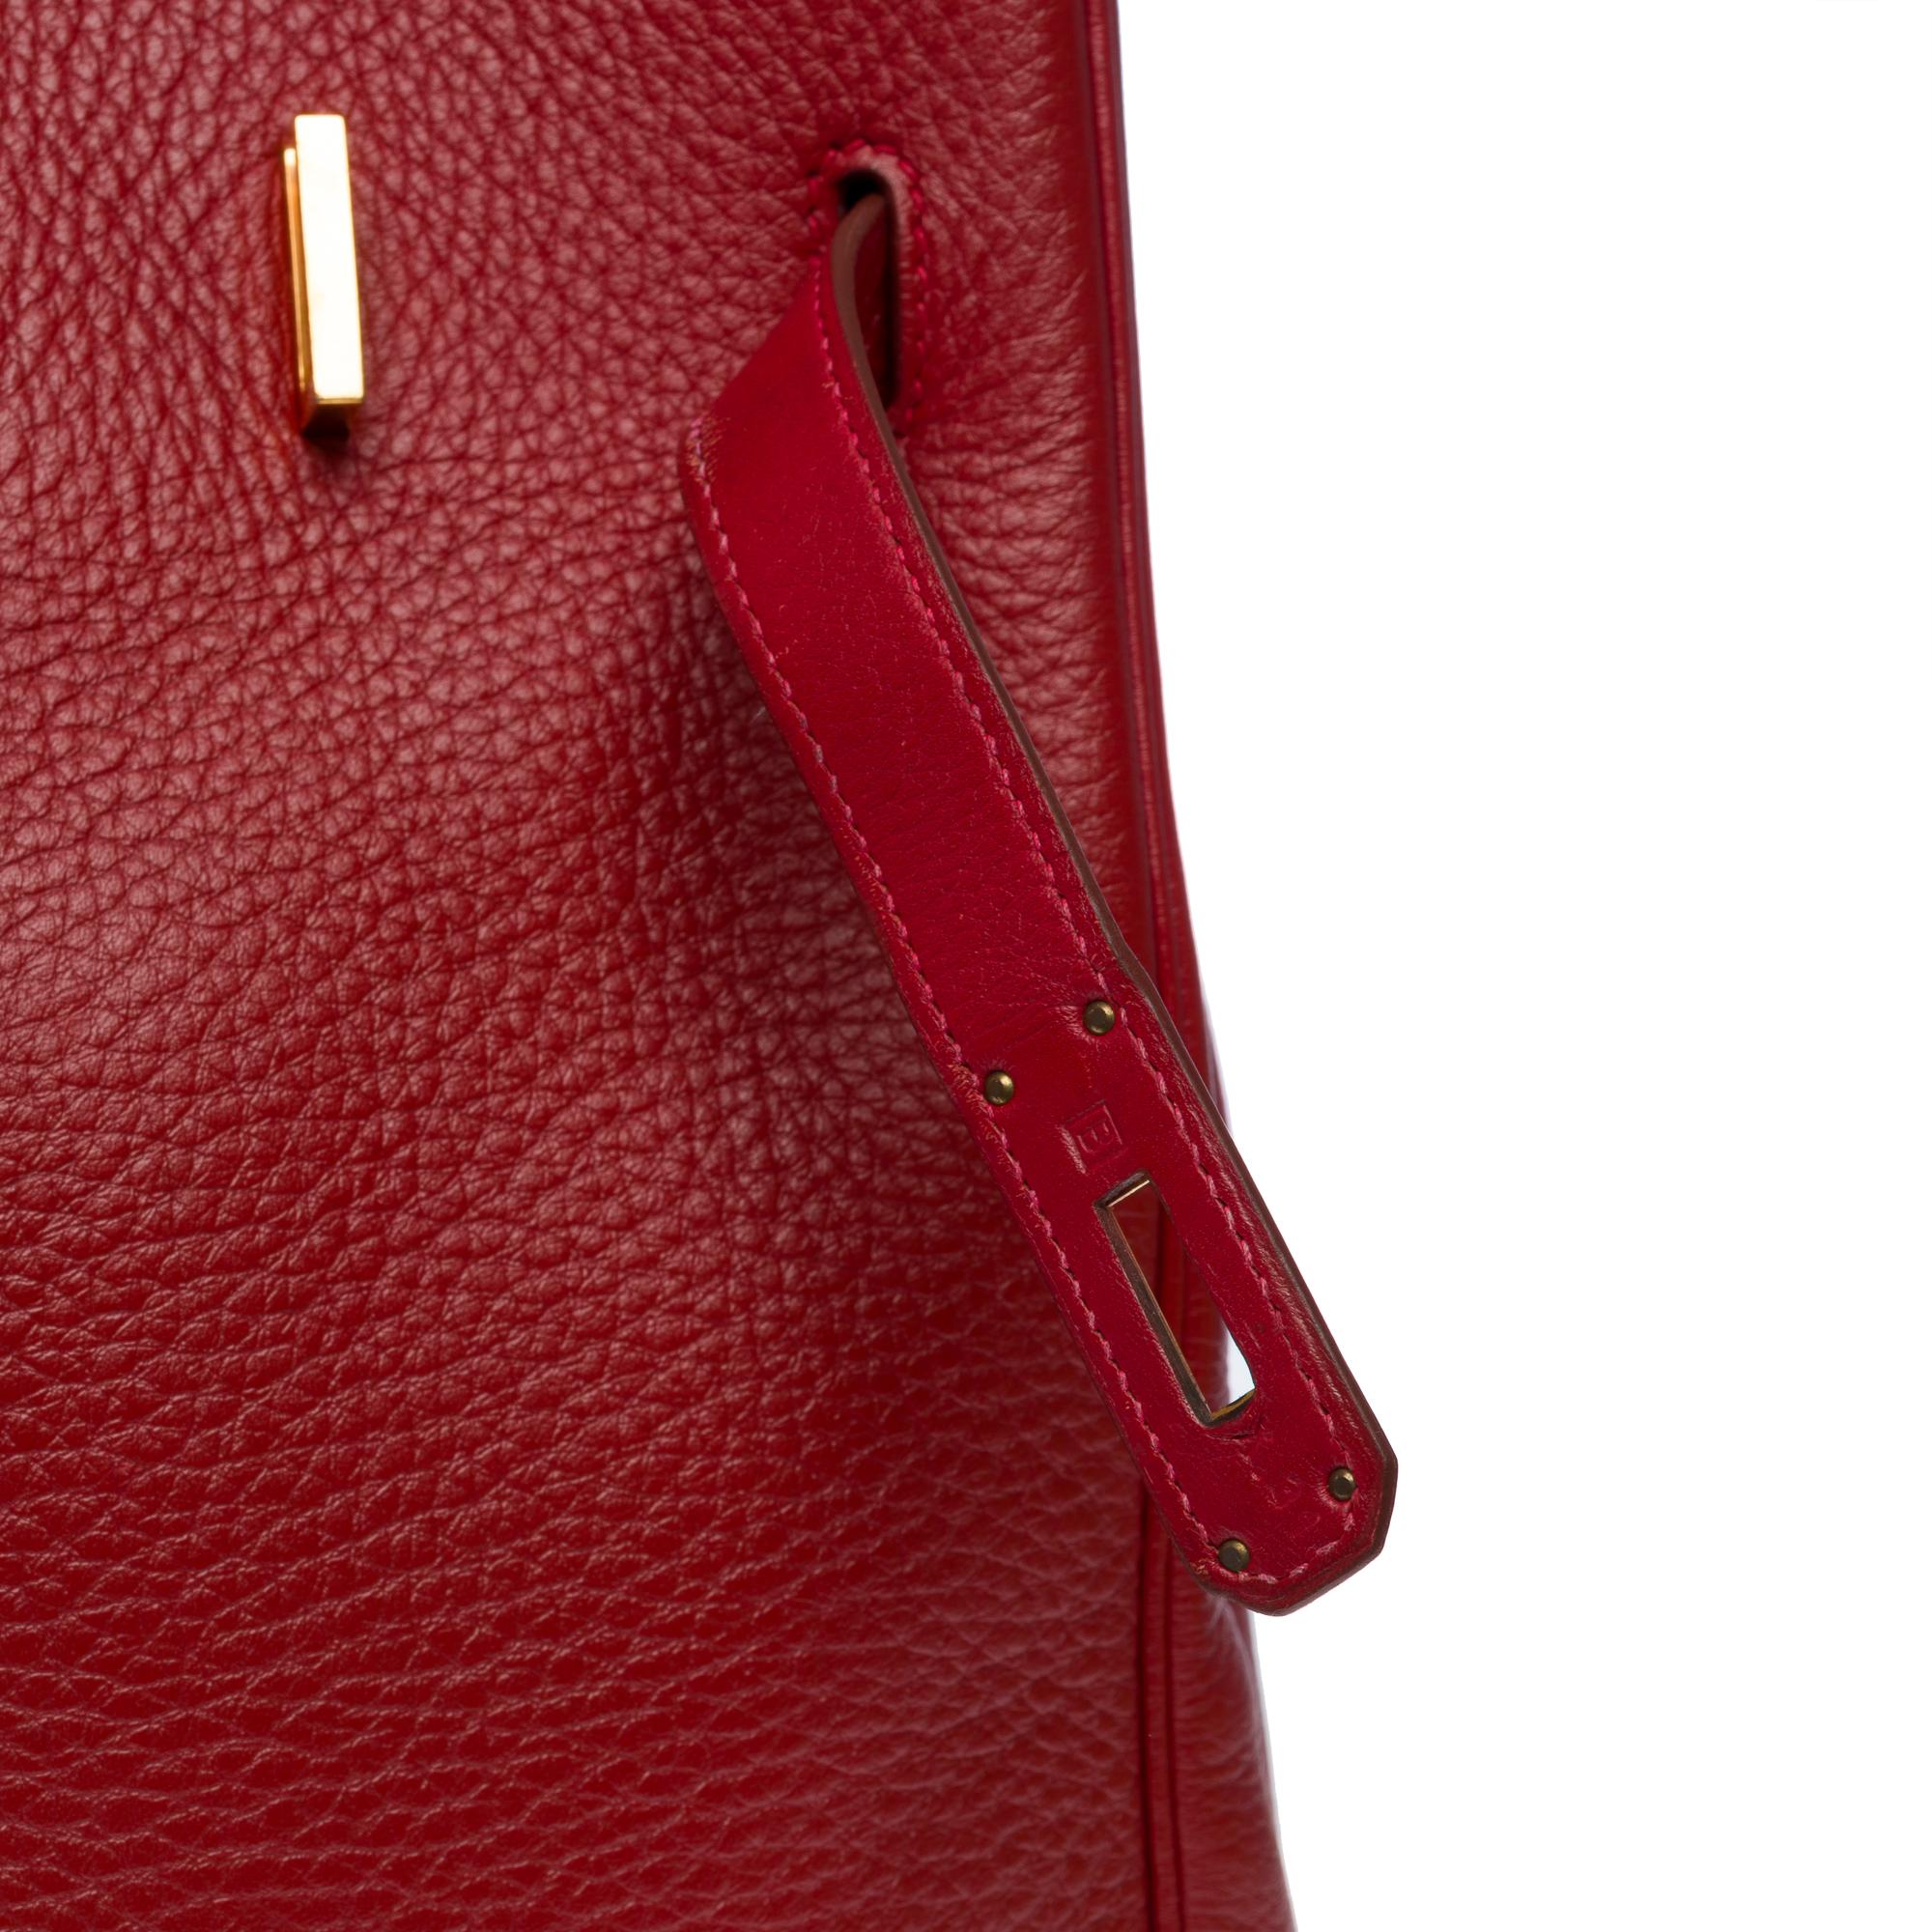 Stunning Hermès Birkin 35 handbag in Rouge Garance Togo leather, GHW For Sale 2